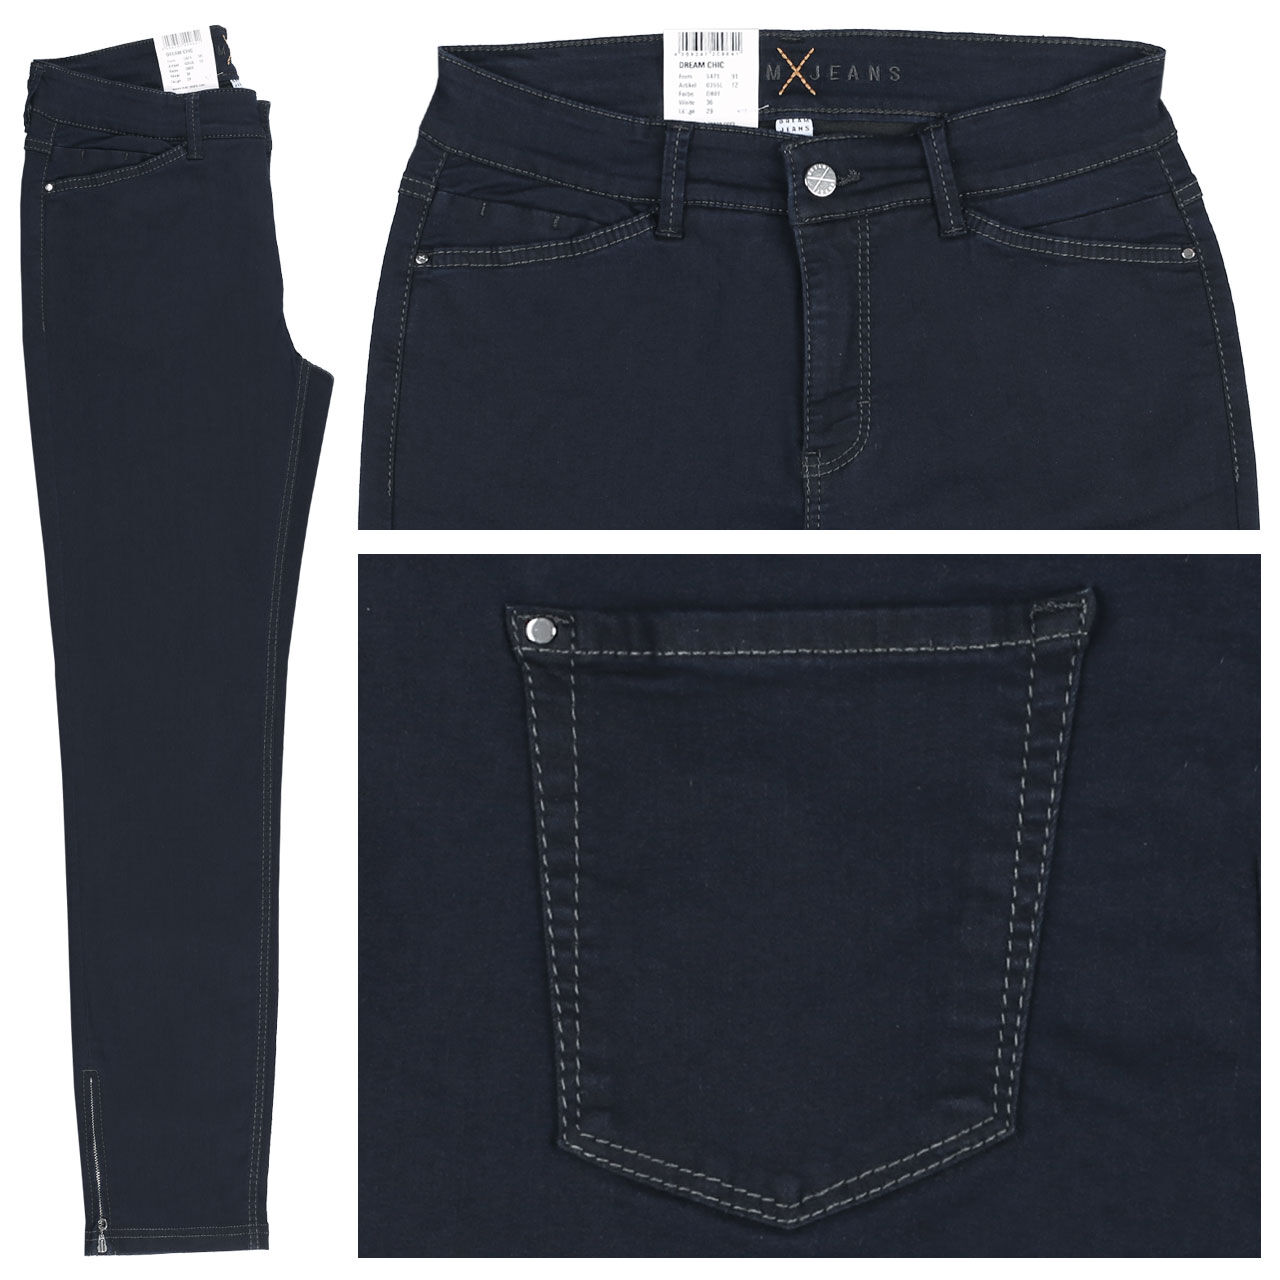 MAC Jeans Dream Chic für Damen in Dunkelblau, FarbNr.: D801